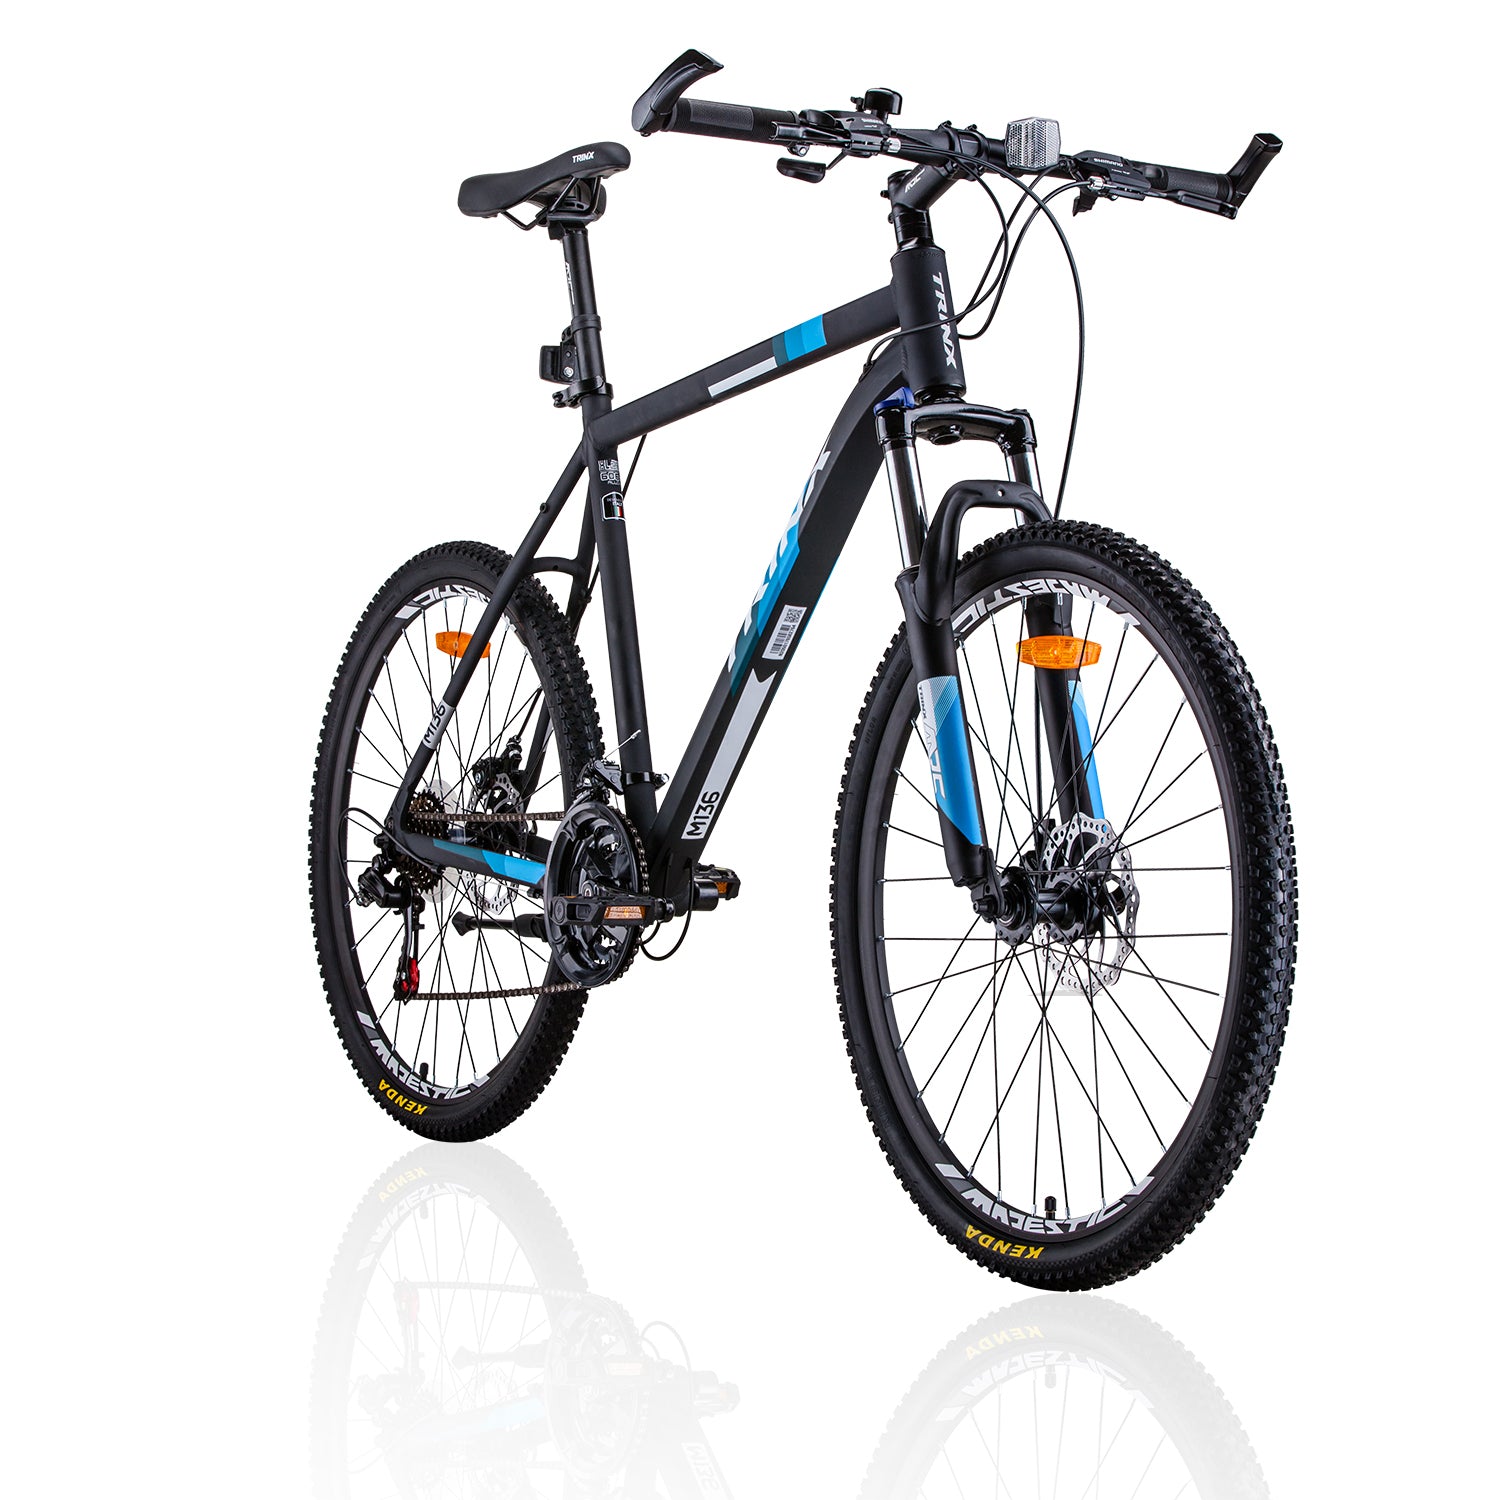 Trinx MTB Mens Mountain Bike 26 inch Shimano Gear 21-Speed [Colour: Matt Black White/Blue] [Size Of Frame: 19 inches]